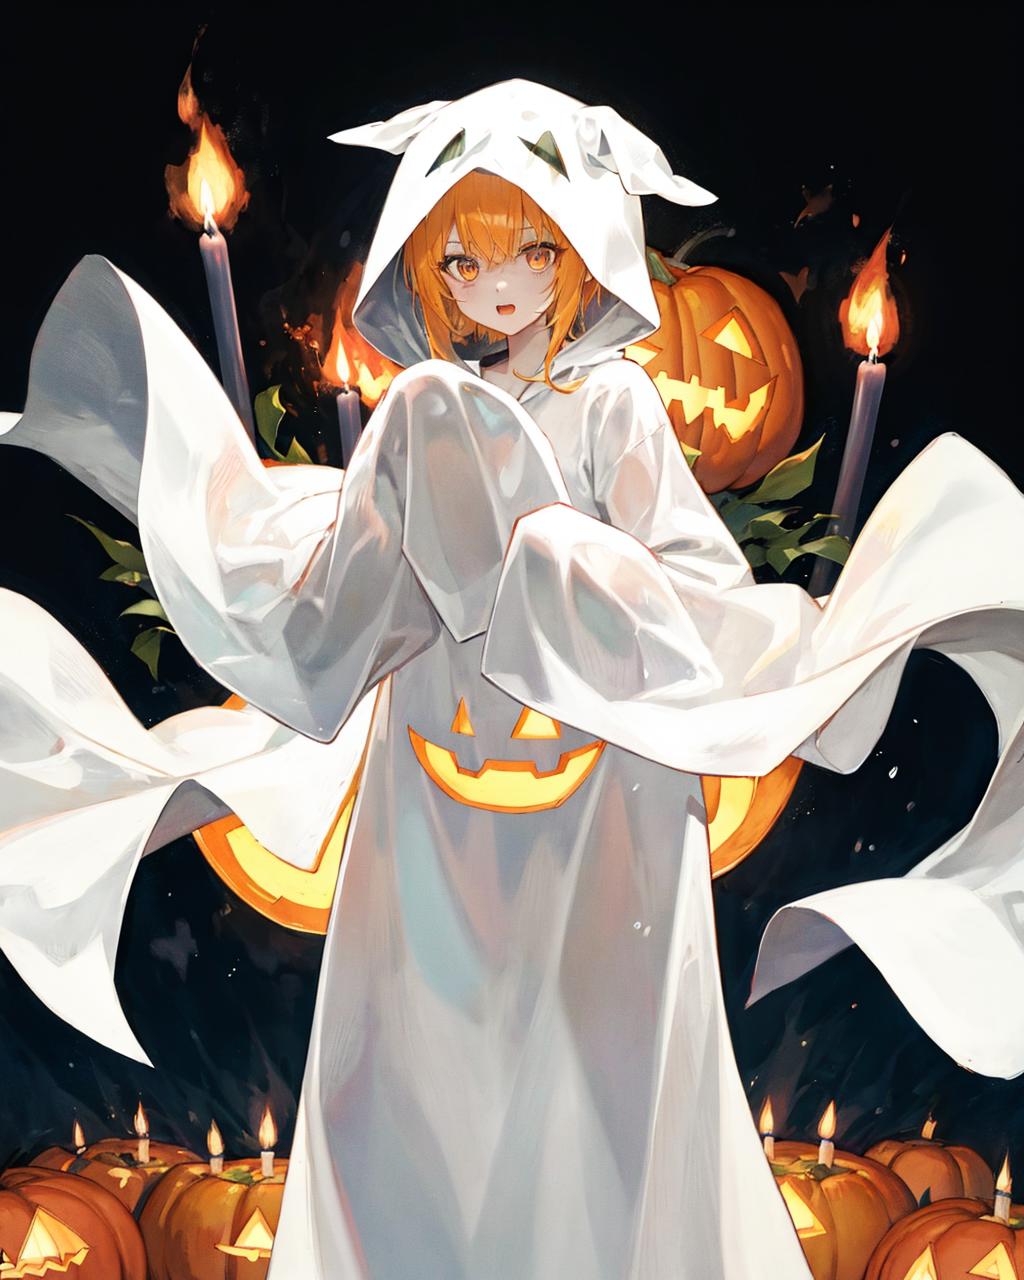 【Costume】Better Ghost Costume 更好的幽灵装 image by rerorerorero